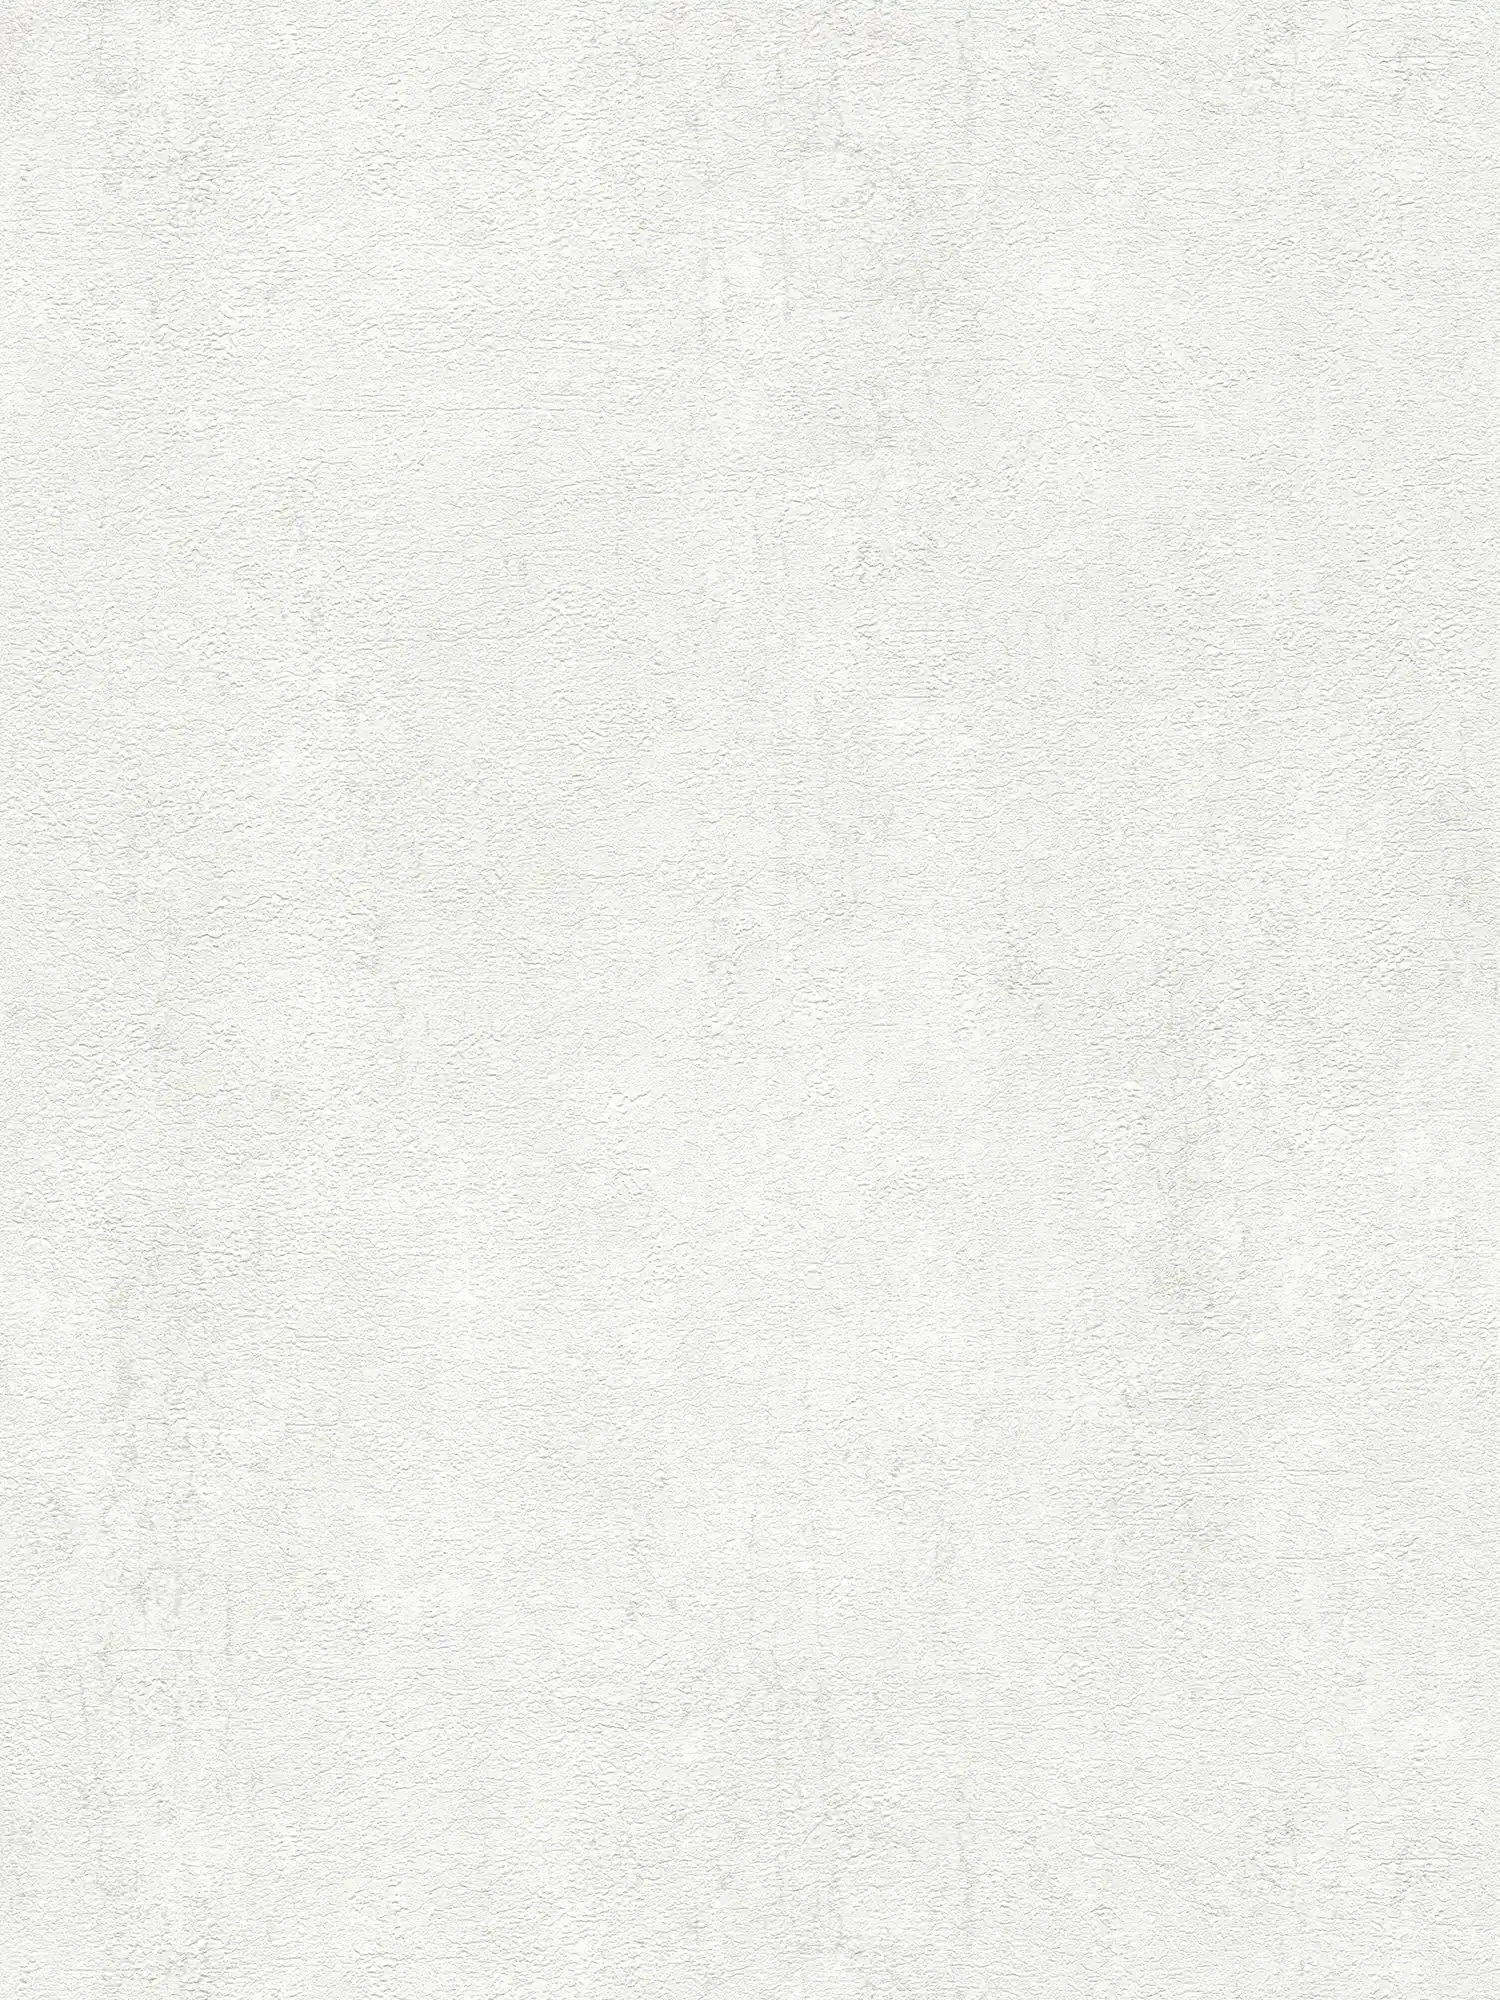 Carta da parati in tessuto non tessuto a tinta unita con effetto opaco-lucido - grigio, bianco
